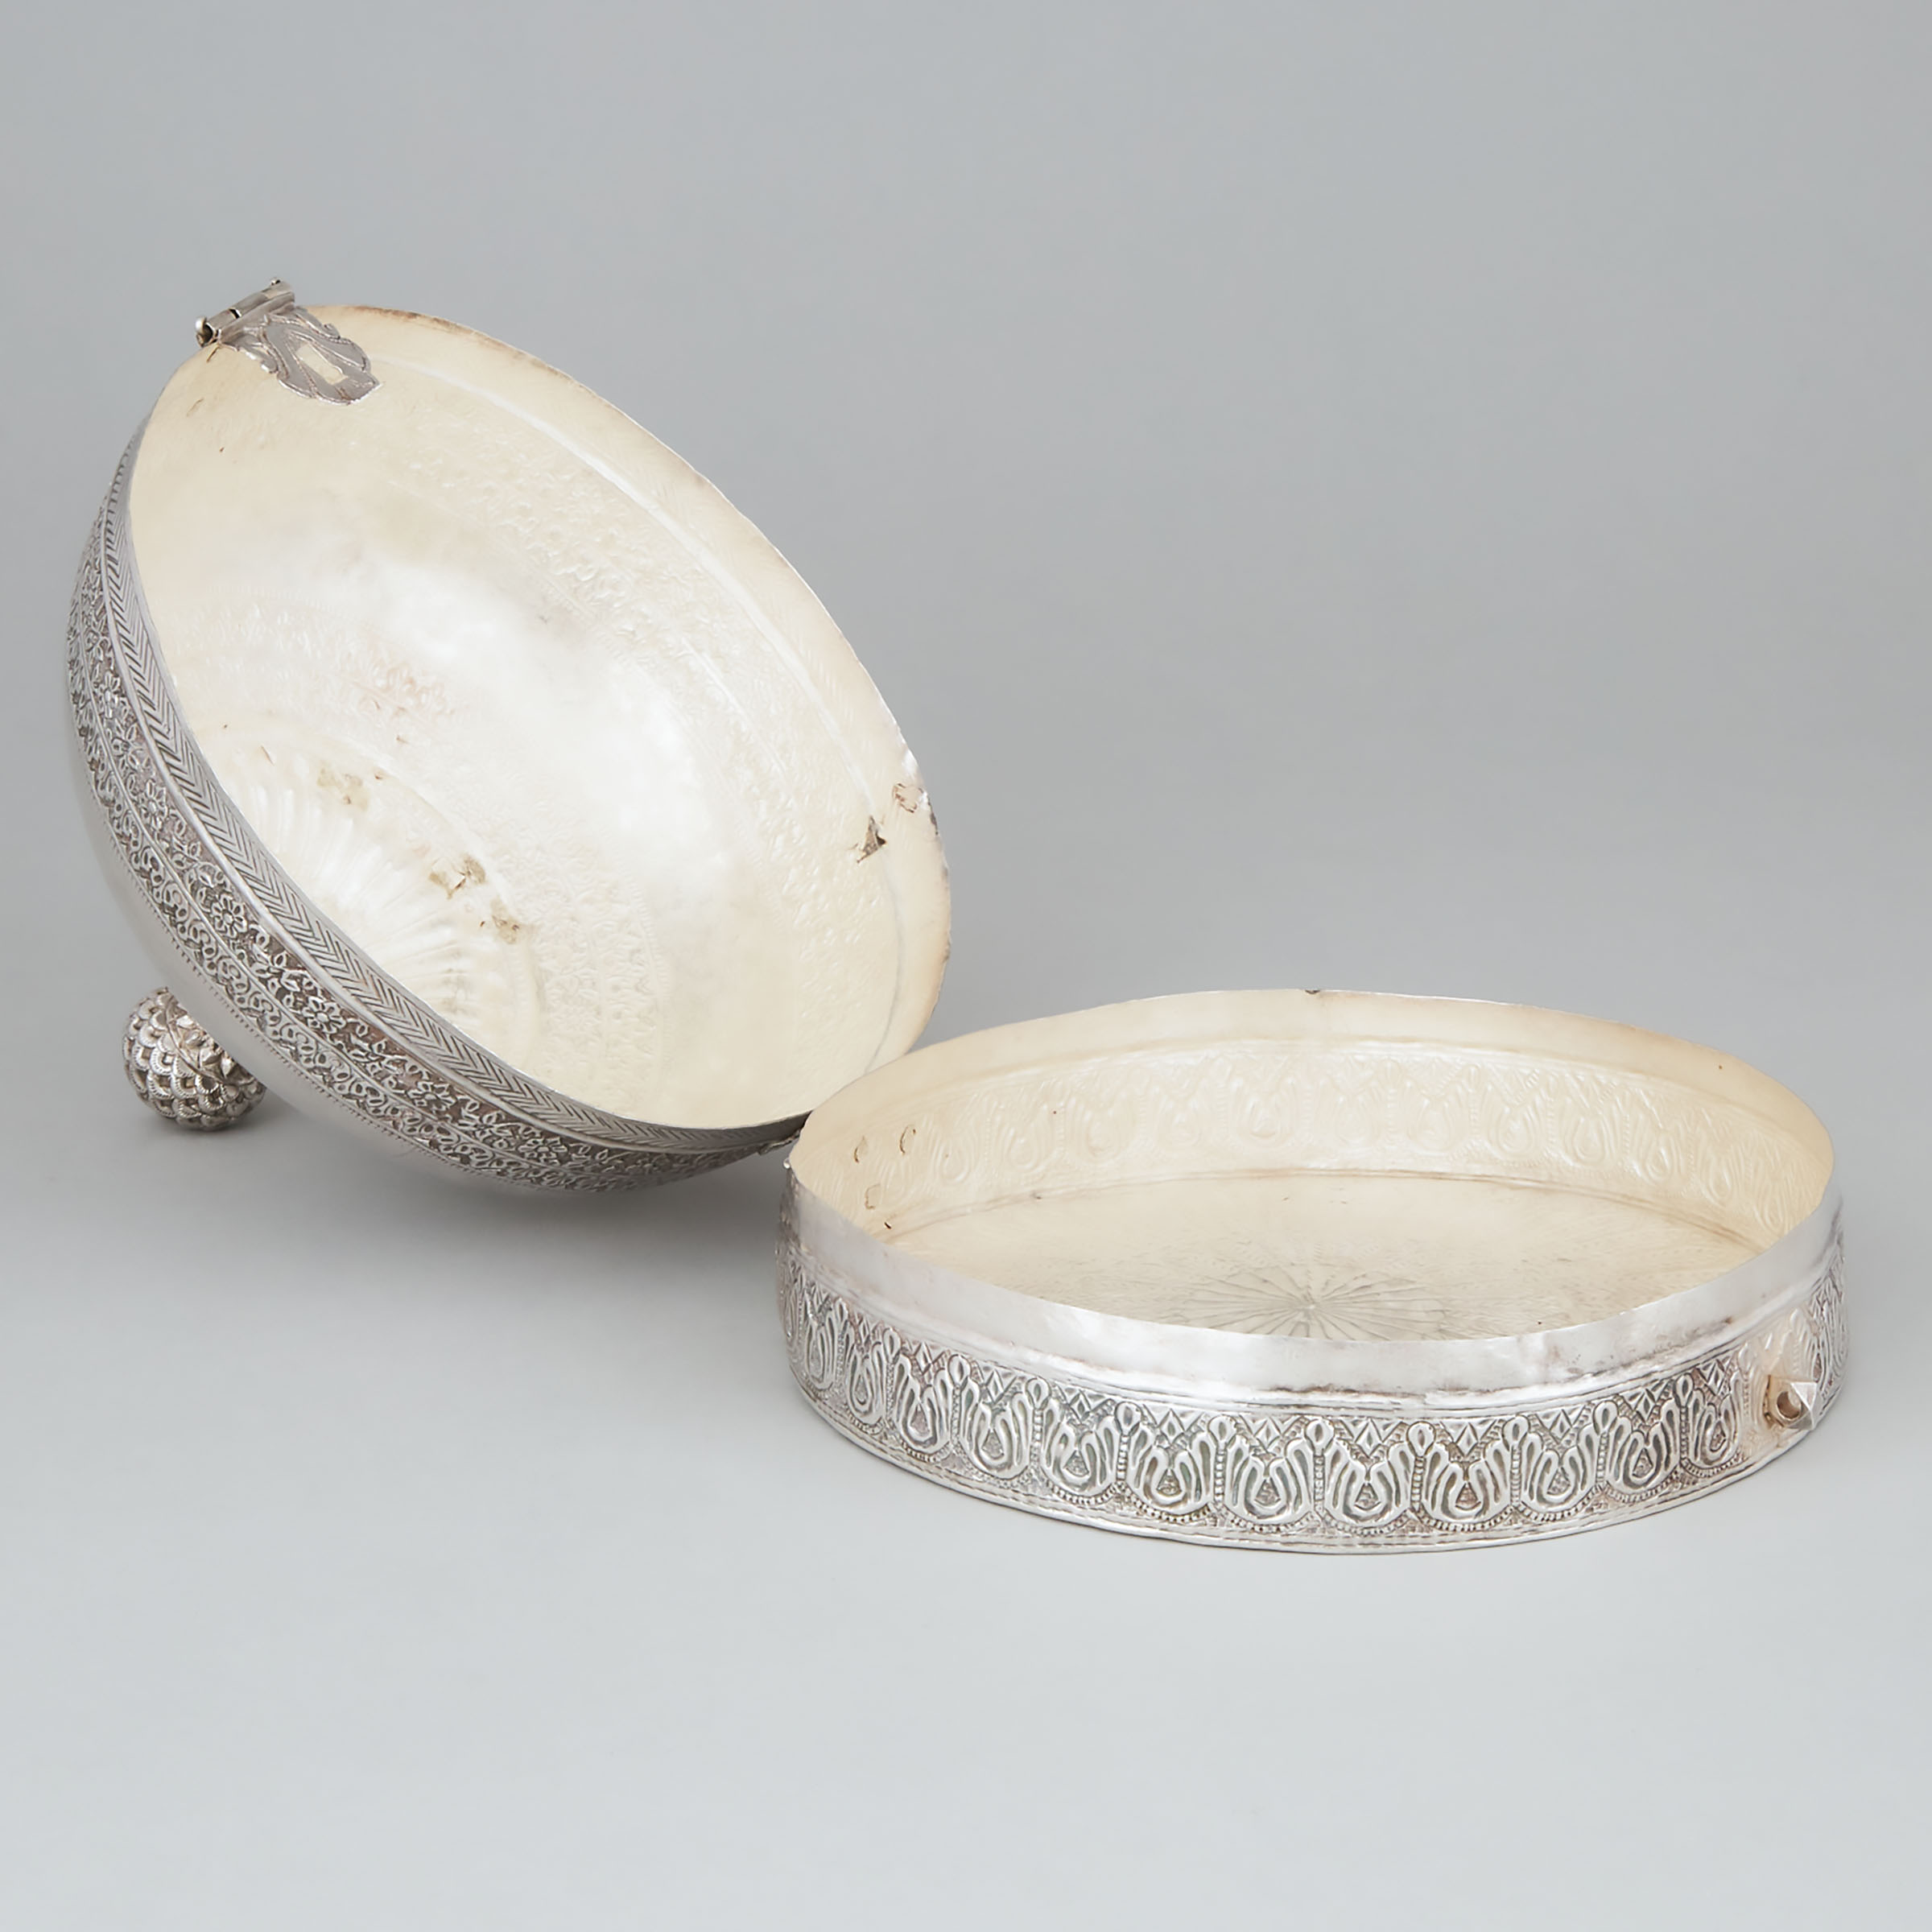 Indian Silver Circular Paan-Daan Box, late 19th/early 20th century